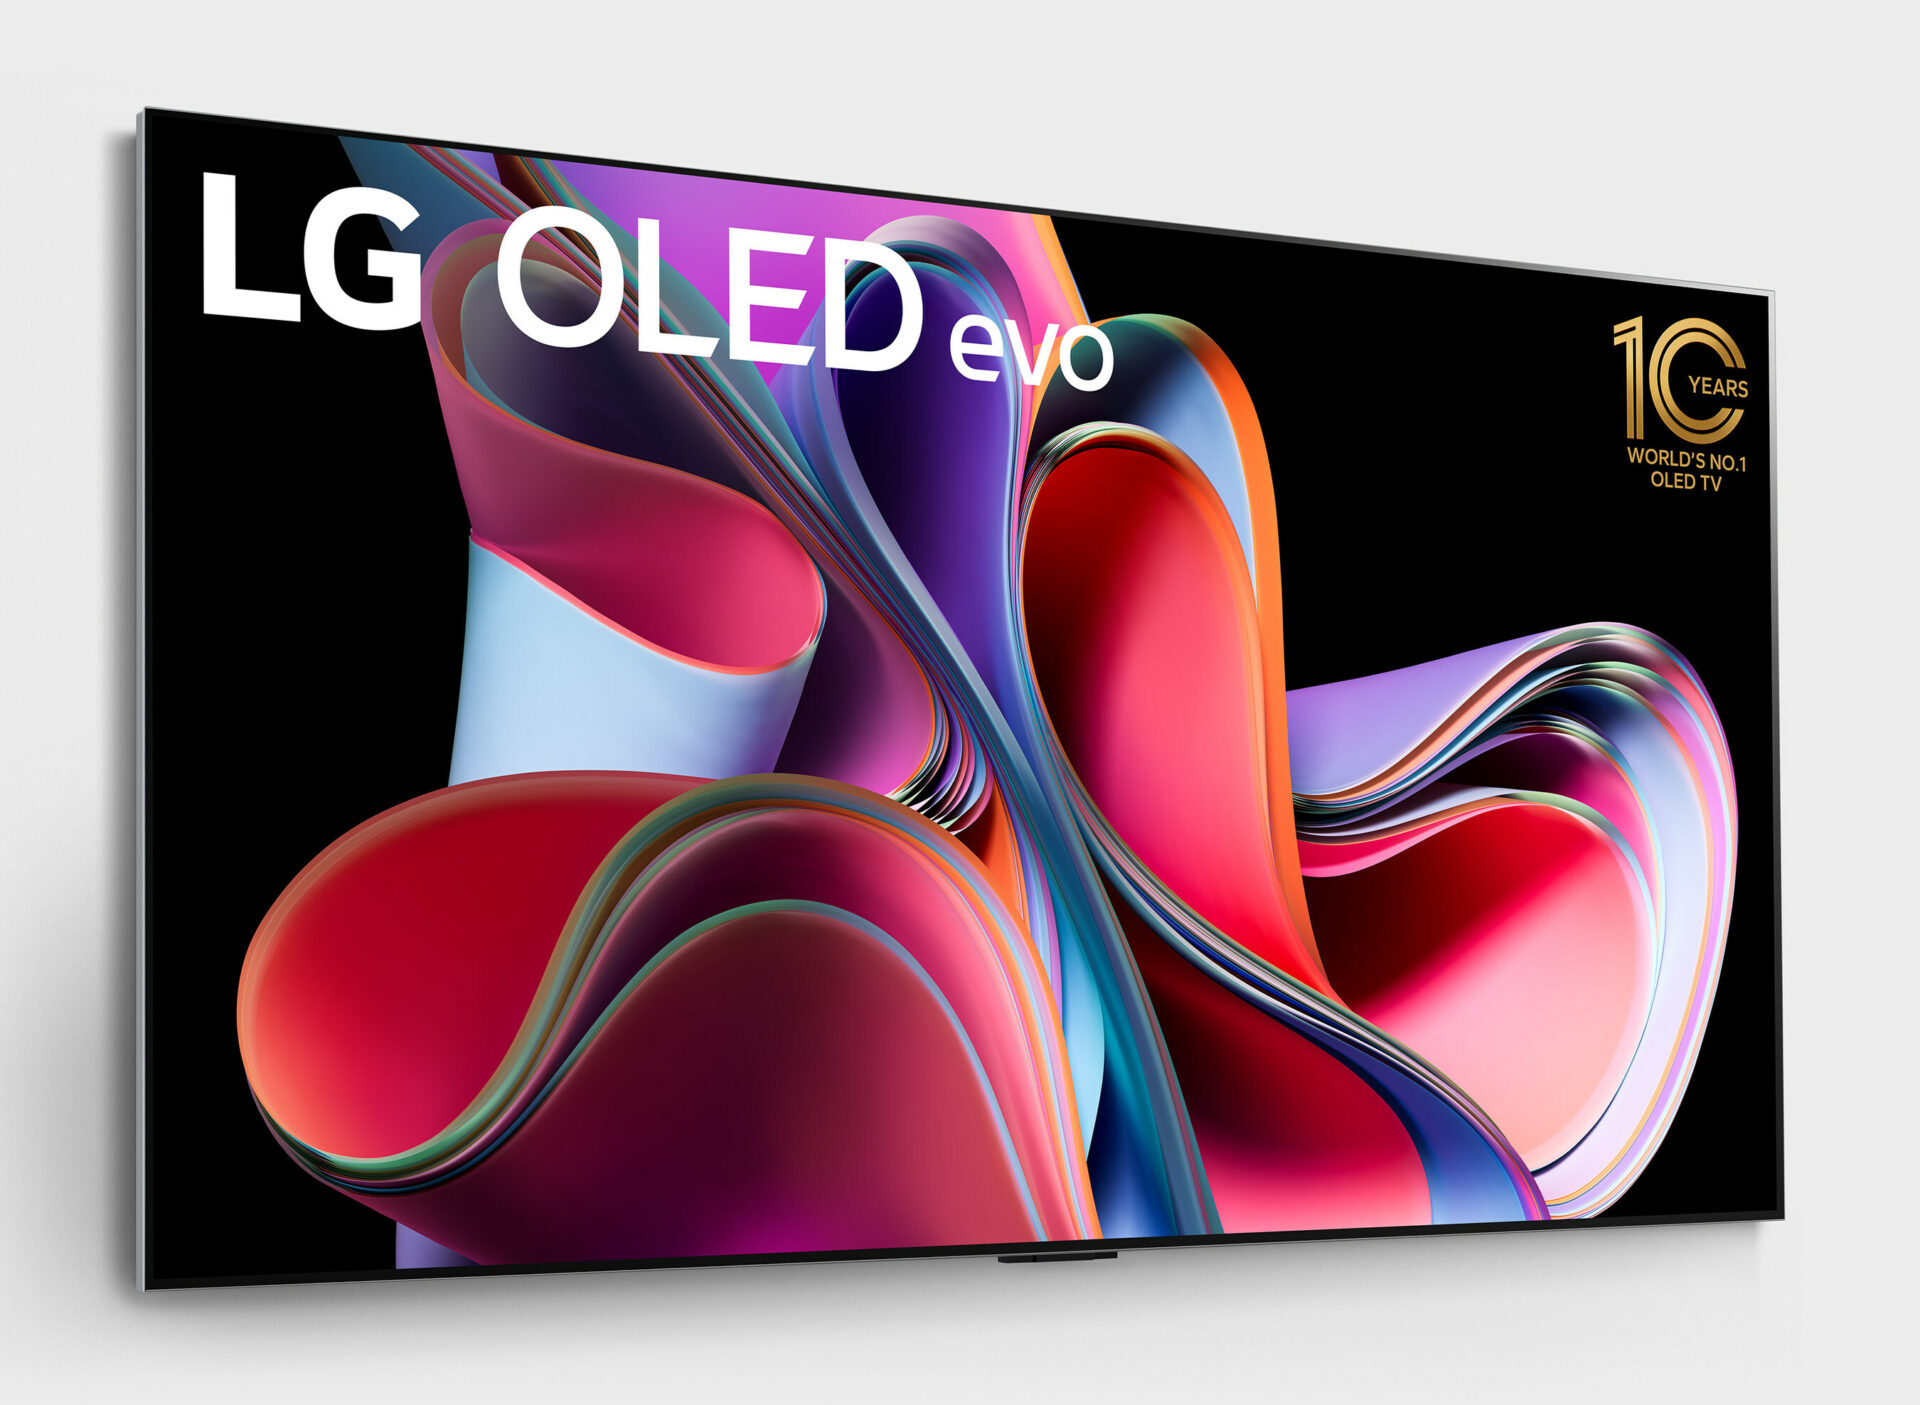 New LG OLED evo is Ready to Impress